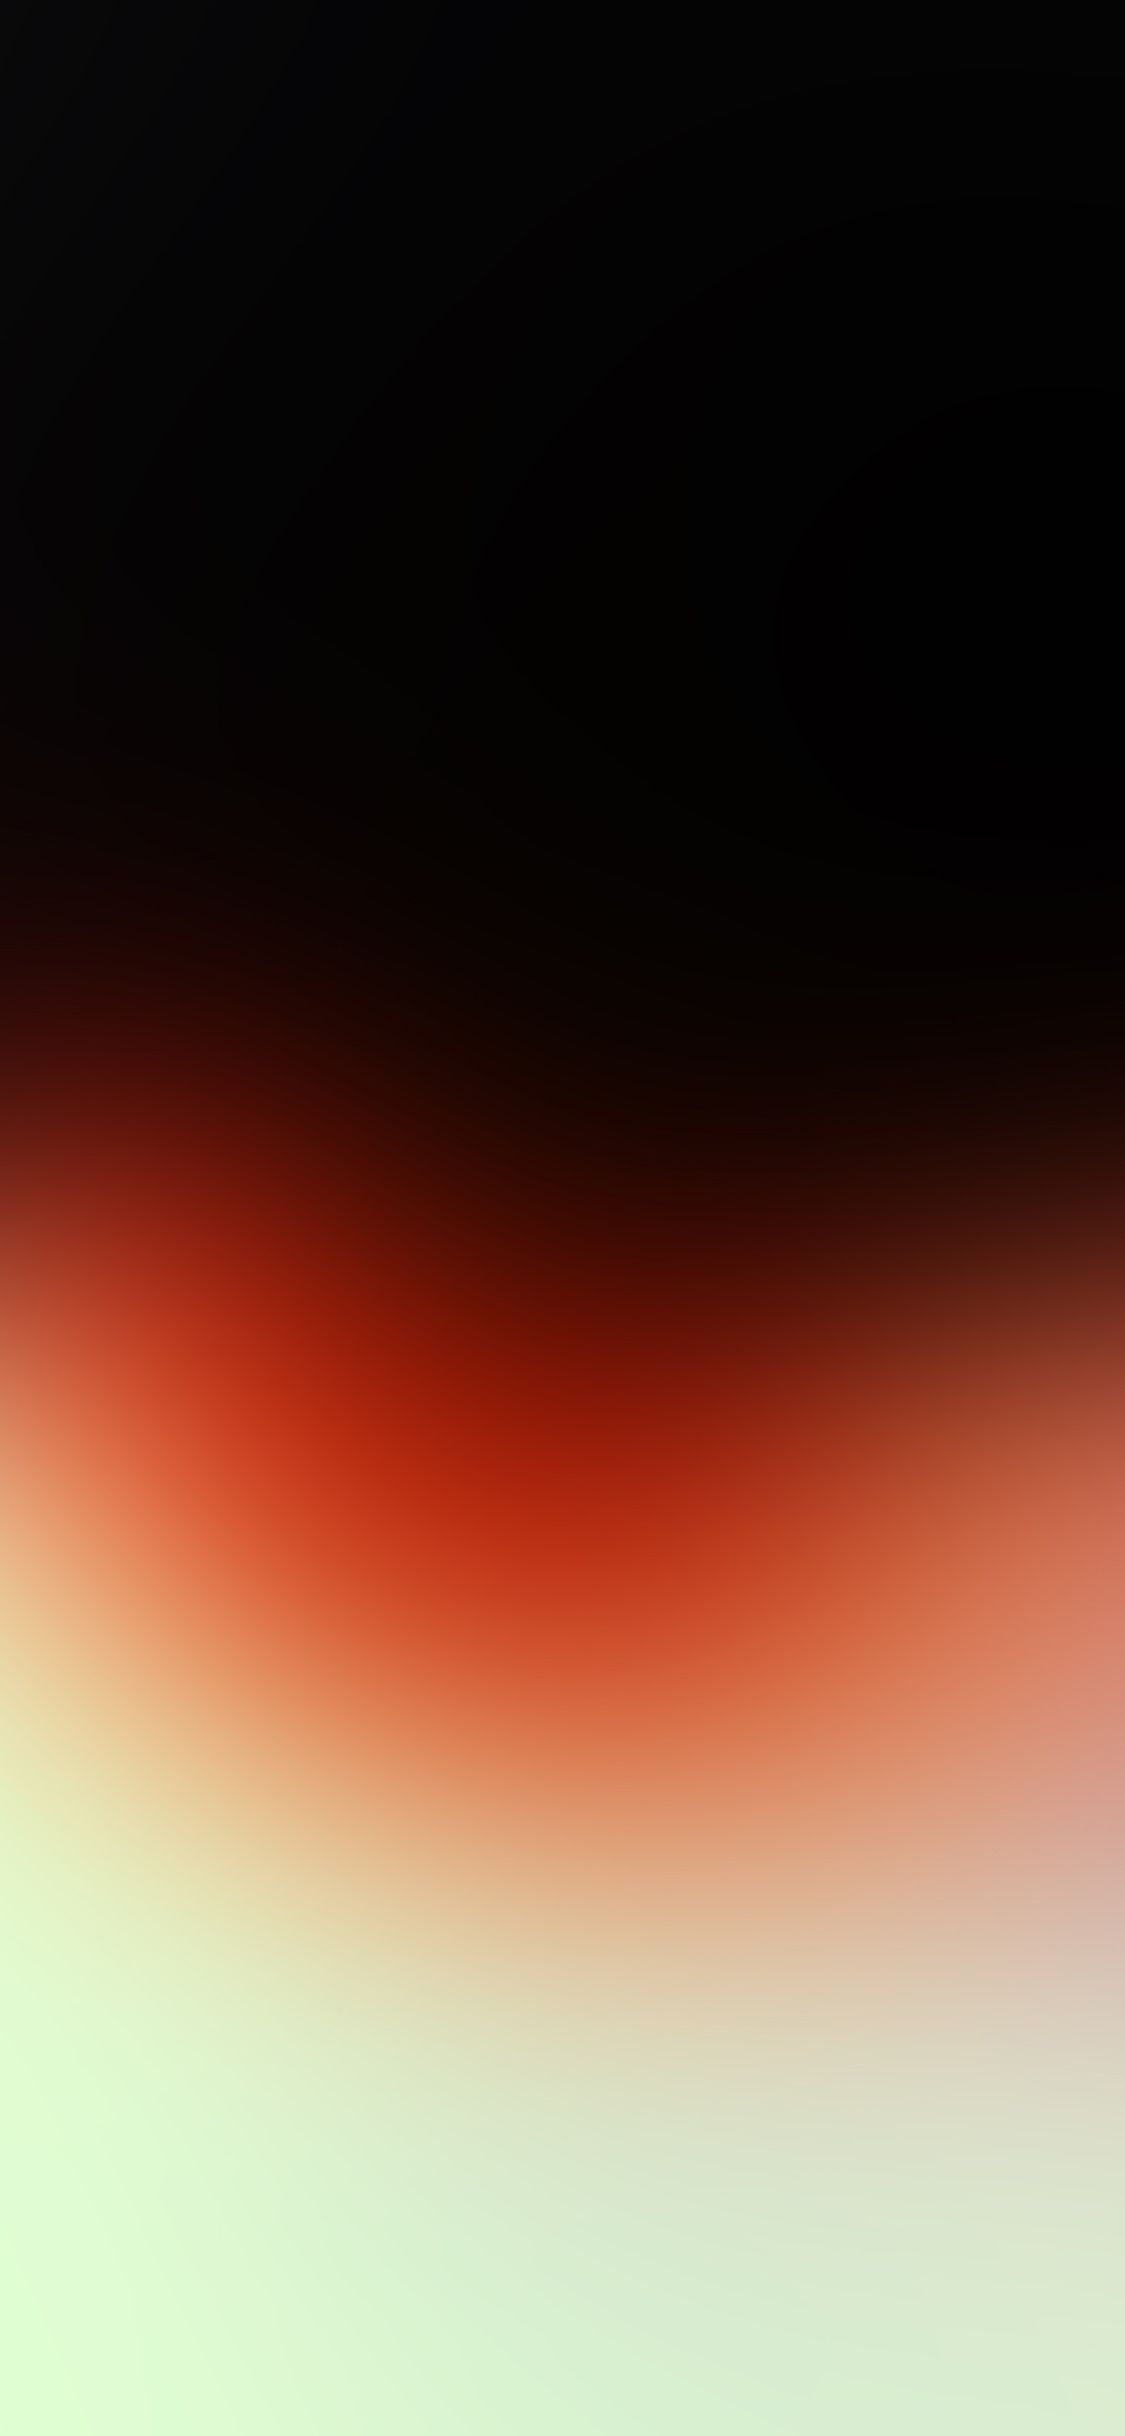 dark red bokeh gradation blur wallpaper 13 pro max Wallpaper, iPhone 12 Background, iPhone Wallpaper, iPhone background., WallpaperUpdate, Best iPhone Wallpaper and iPhone background